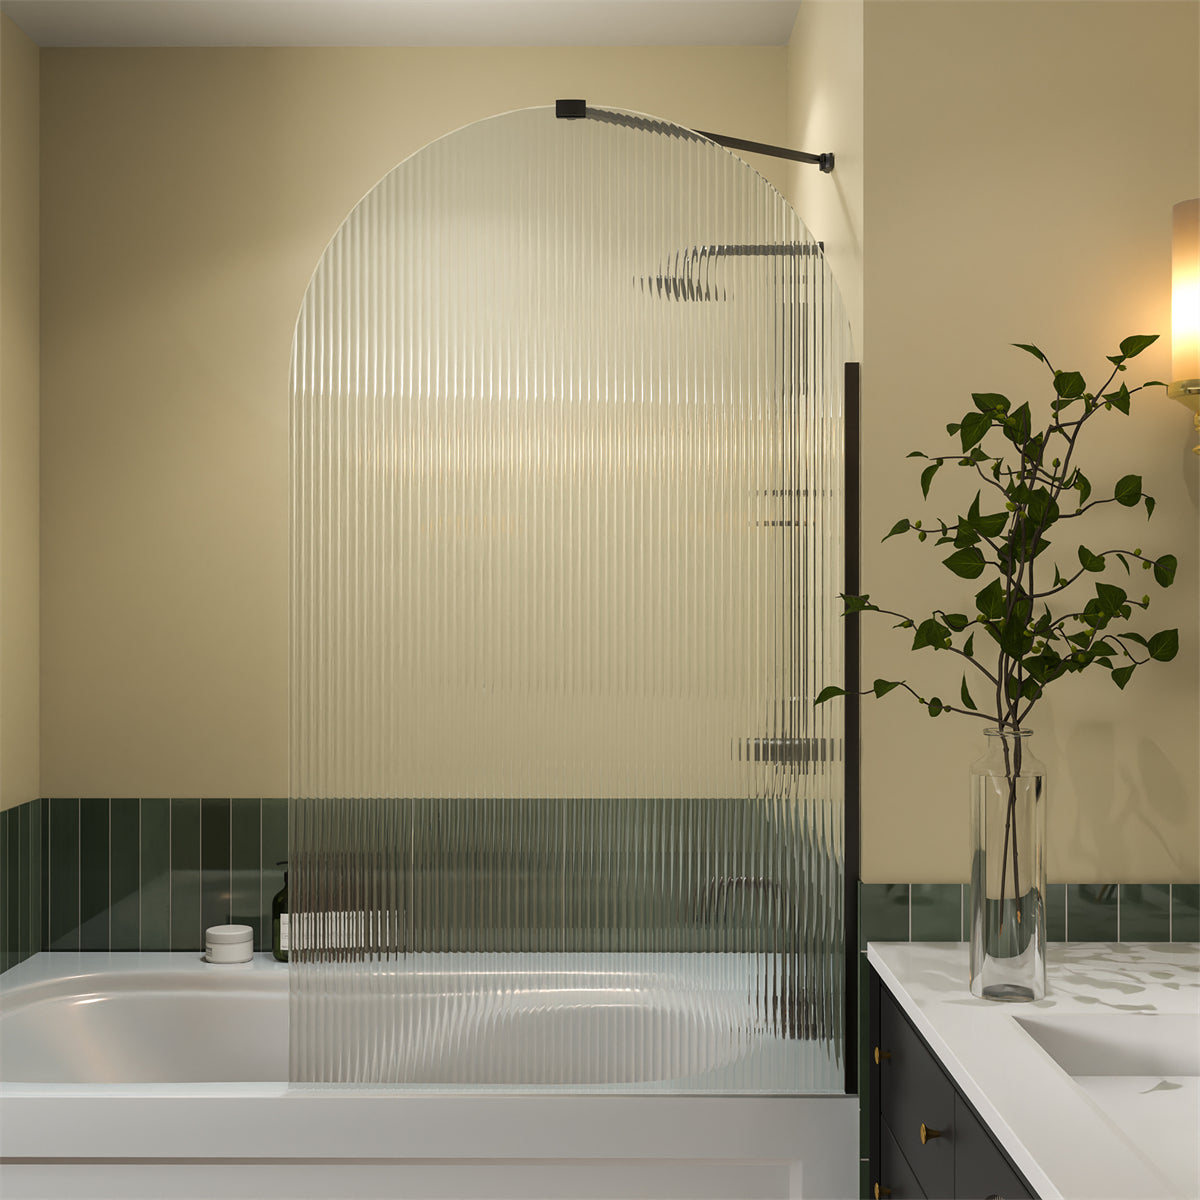 Serenity 33 X 58 Bathtub Screen Reeded Glass Shower Panel For Bathtub,Matte Black Finish,Reversible Installation,Semicircle